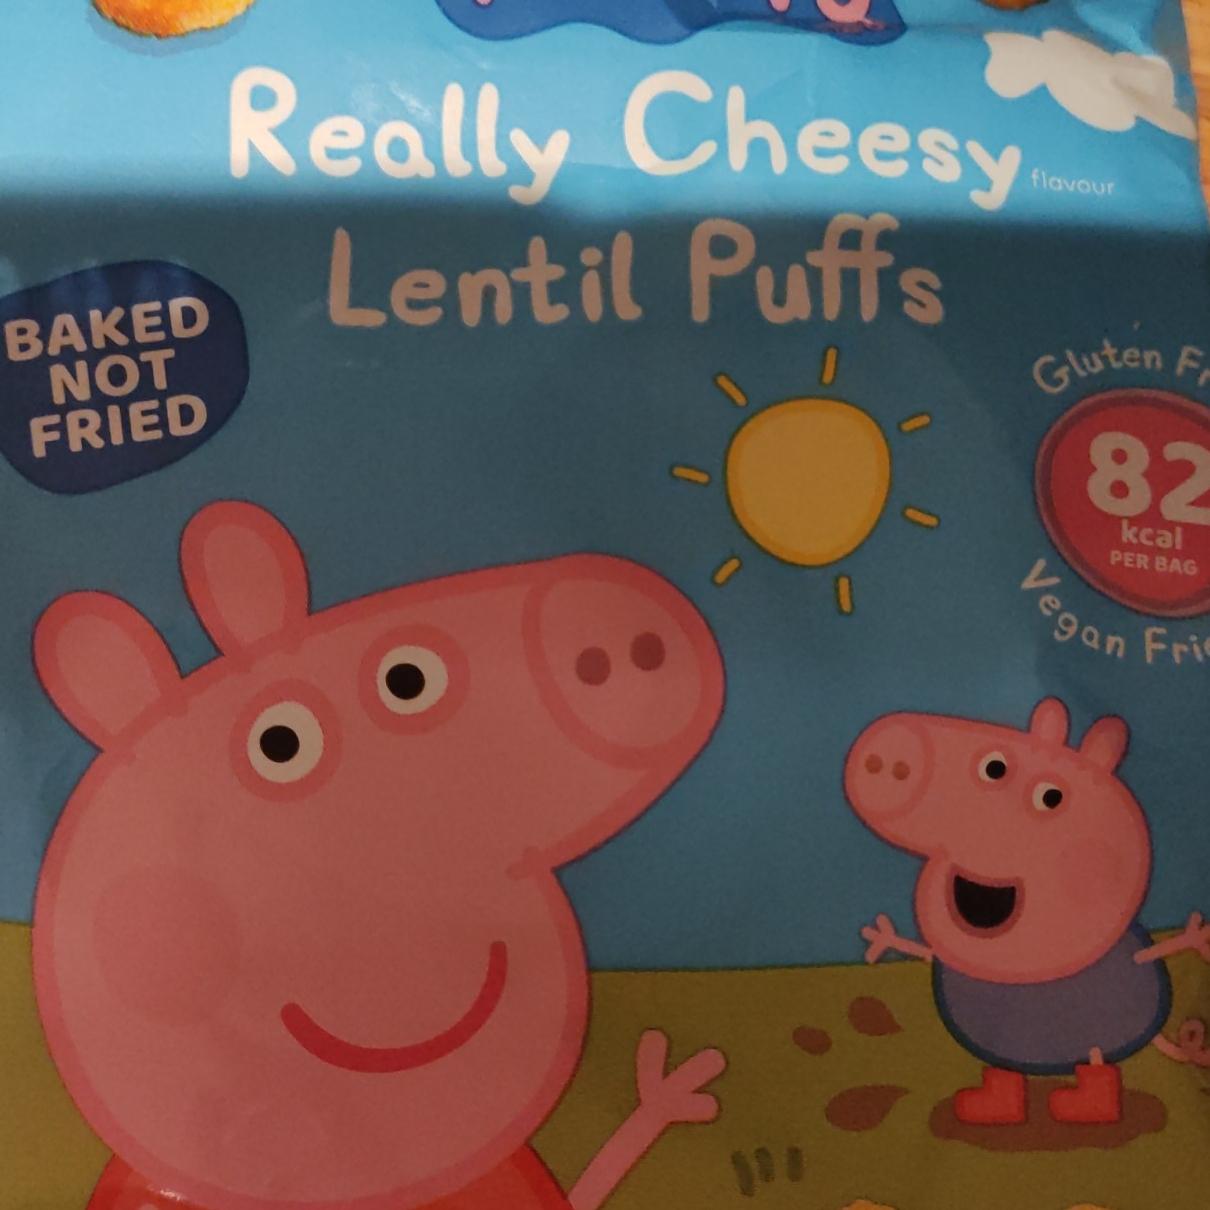 Fotografie - Really Cheesy Lentil puffs Peppa Pig